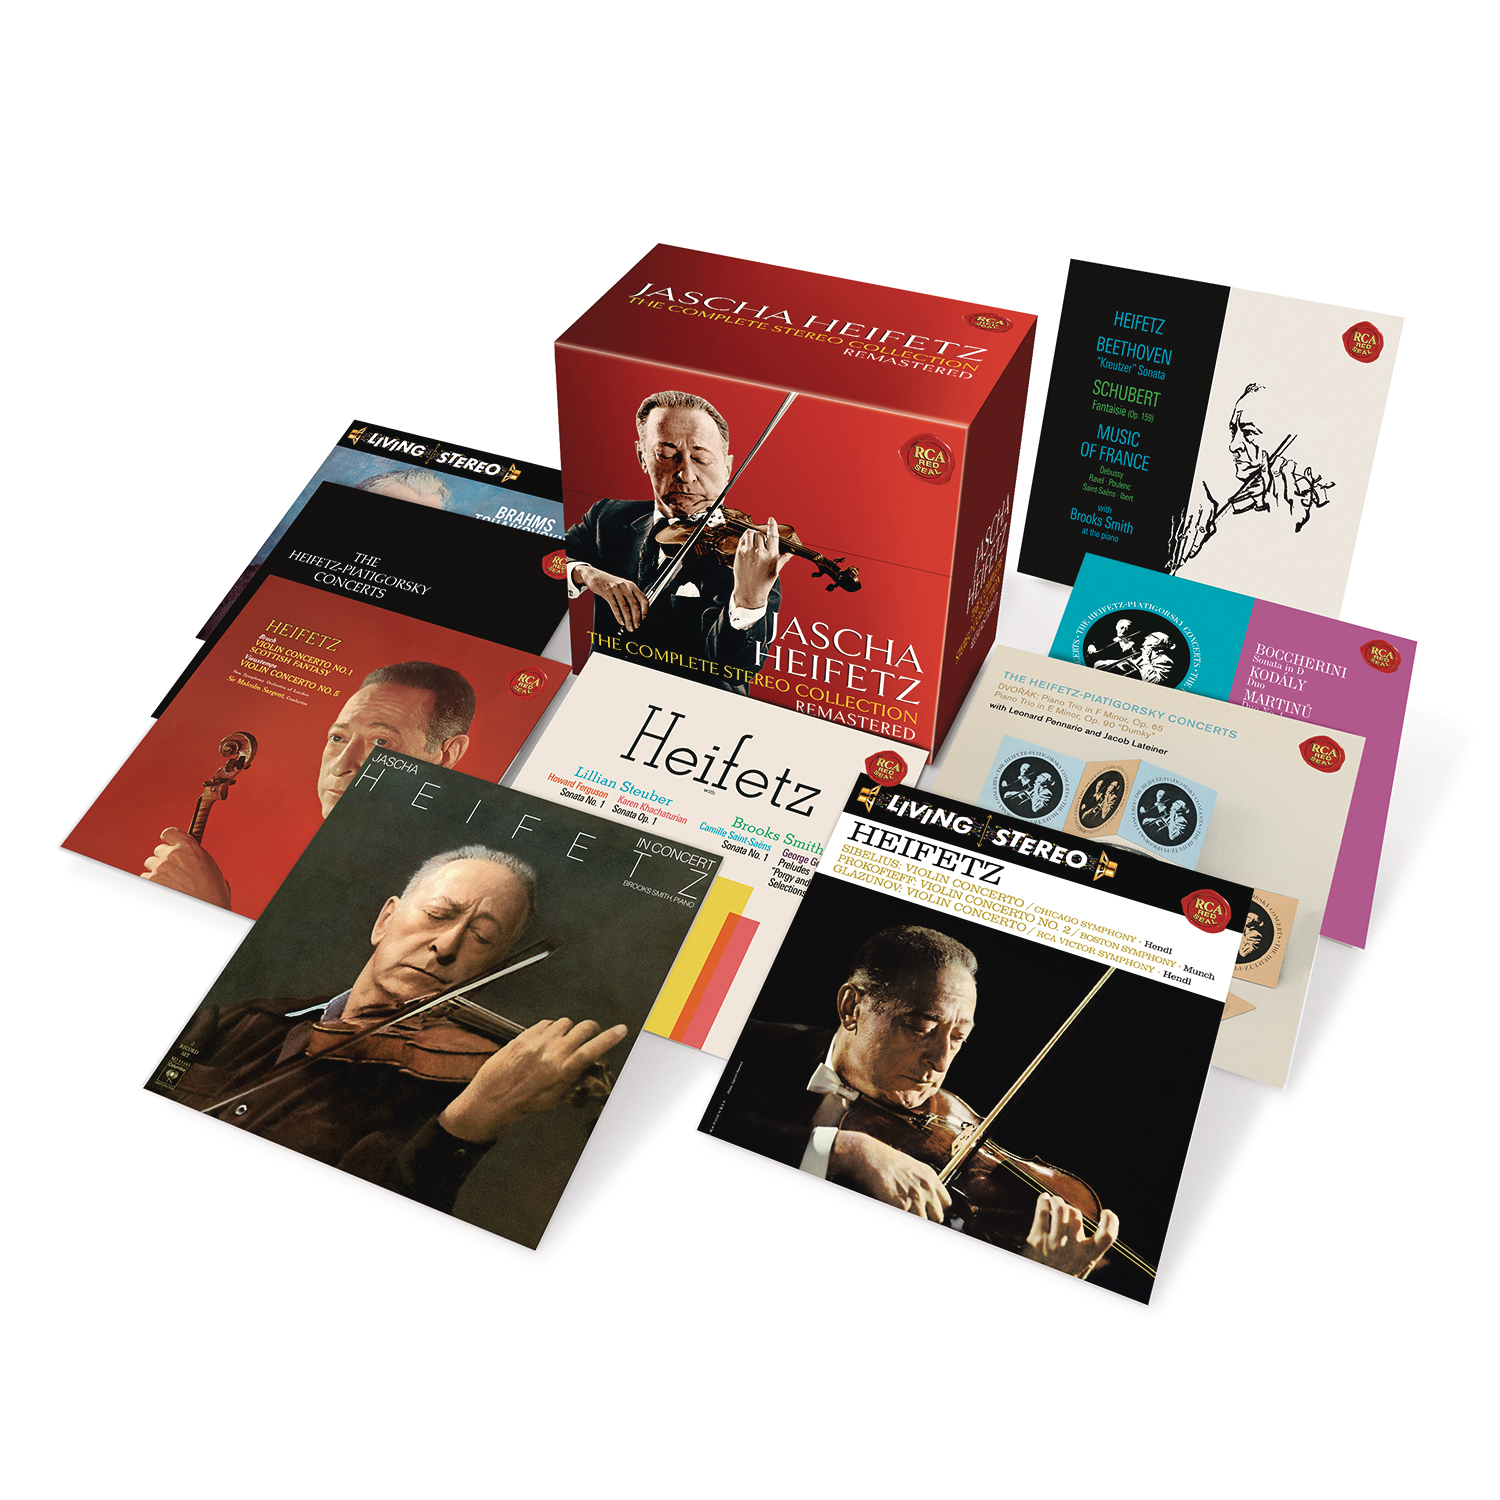 Jascha Heifetz - Jascha Heifetz - The Complete Stereo Collection Remastered